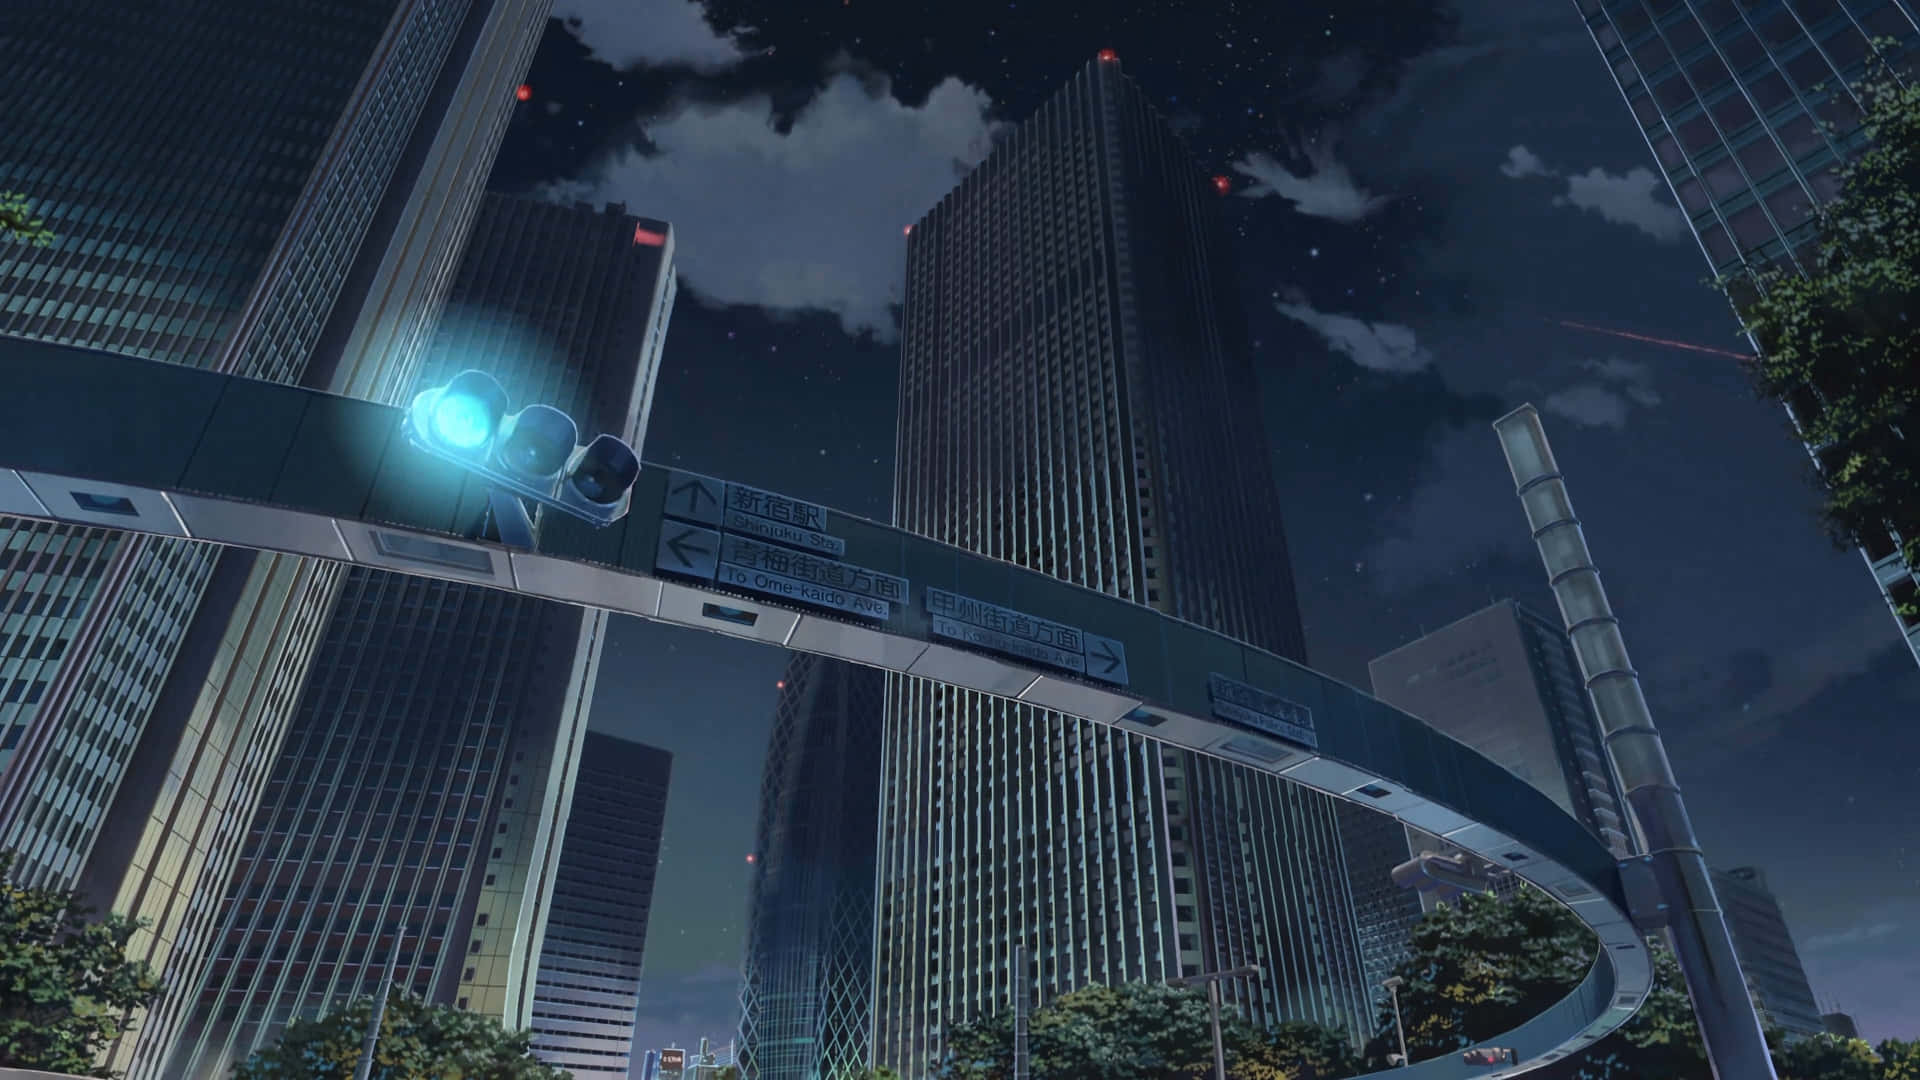 Unretrato Del Famoso Cineasta De Anime Makoto Shinkai Realizado Por Un Artista.